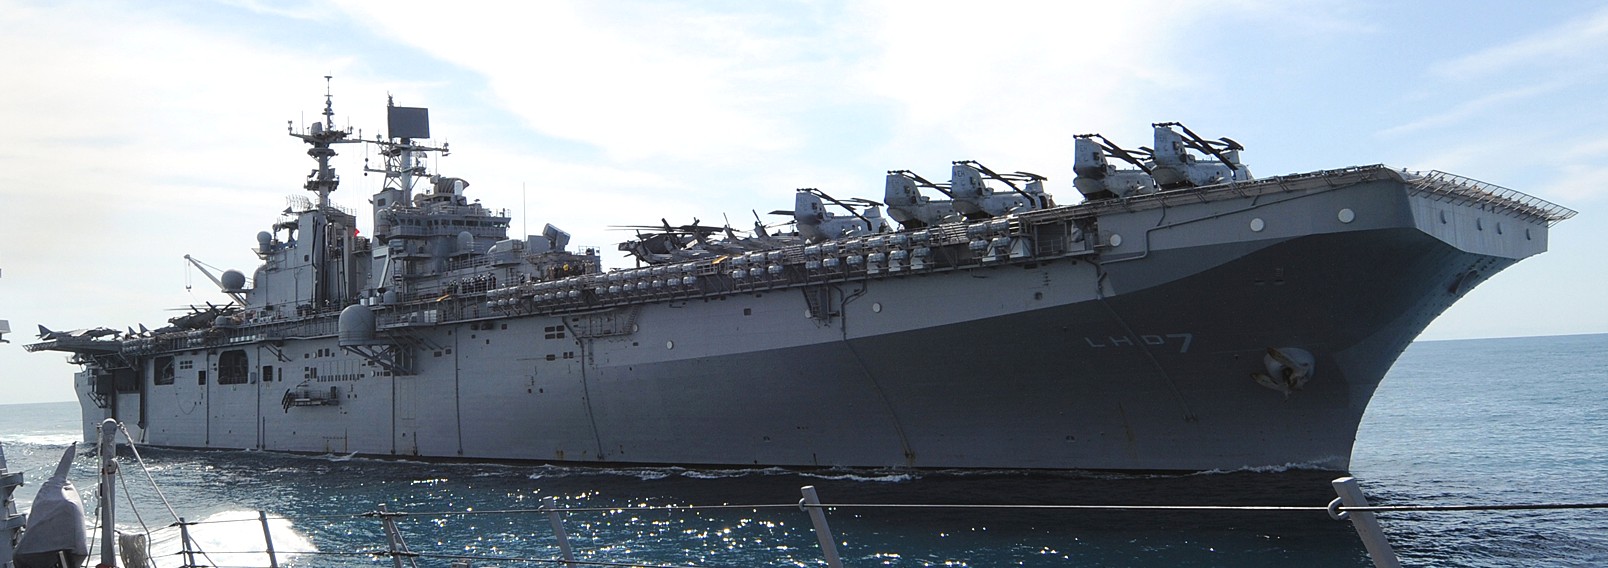 lhd-7 uss iwo jima wasp class amphibious assault ship dock landing helicopter us navy hmm-264 marines 38